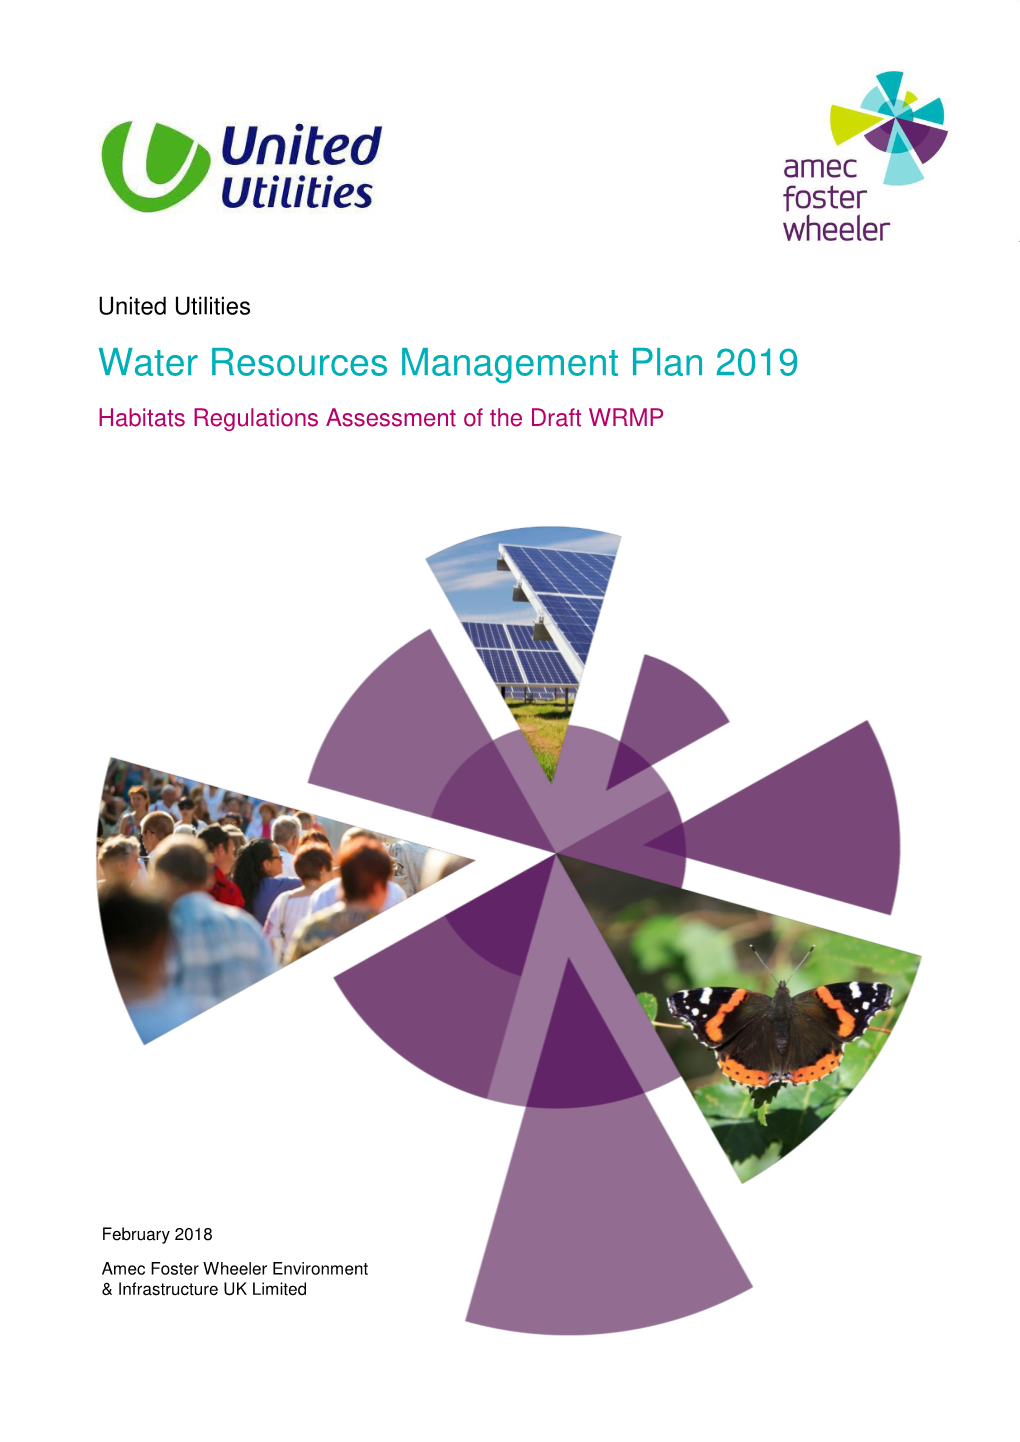 Habitats Regulations Assessment of the Draft WRMP